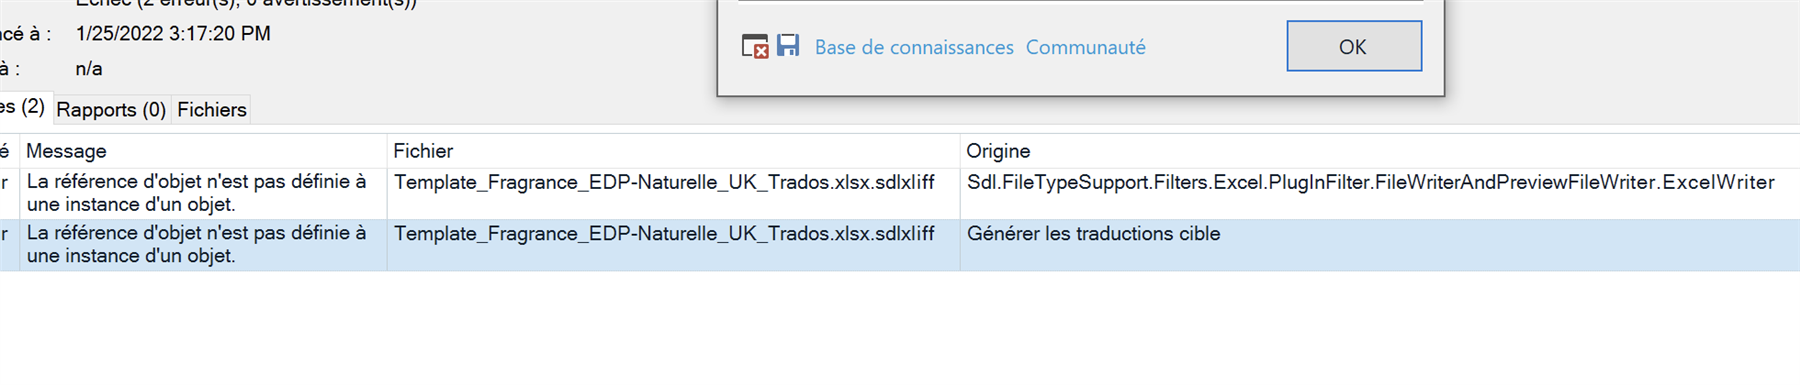 Error message in Trados Studio showing 'La reference d'objet n'est pas definie a une instance d'un objet' for file Template_Fragrance_EDP-Naturelle_UK_Trados.xlsx.sdlxliff from Sdl.FileTypeSupport.Filters.Excel.PluginFilter.FileWriterAndPreviewFileWriter.ExcelWriter.